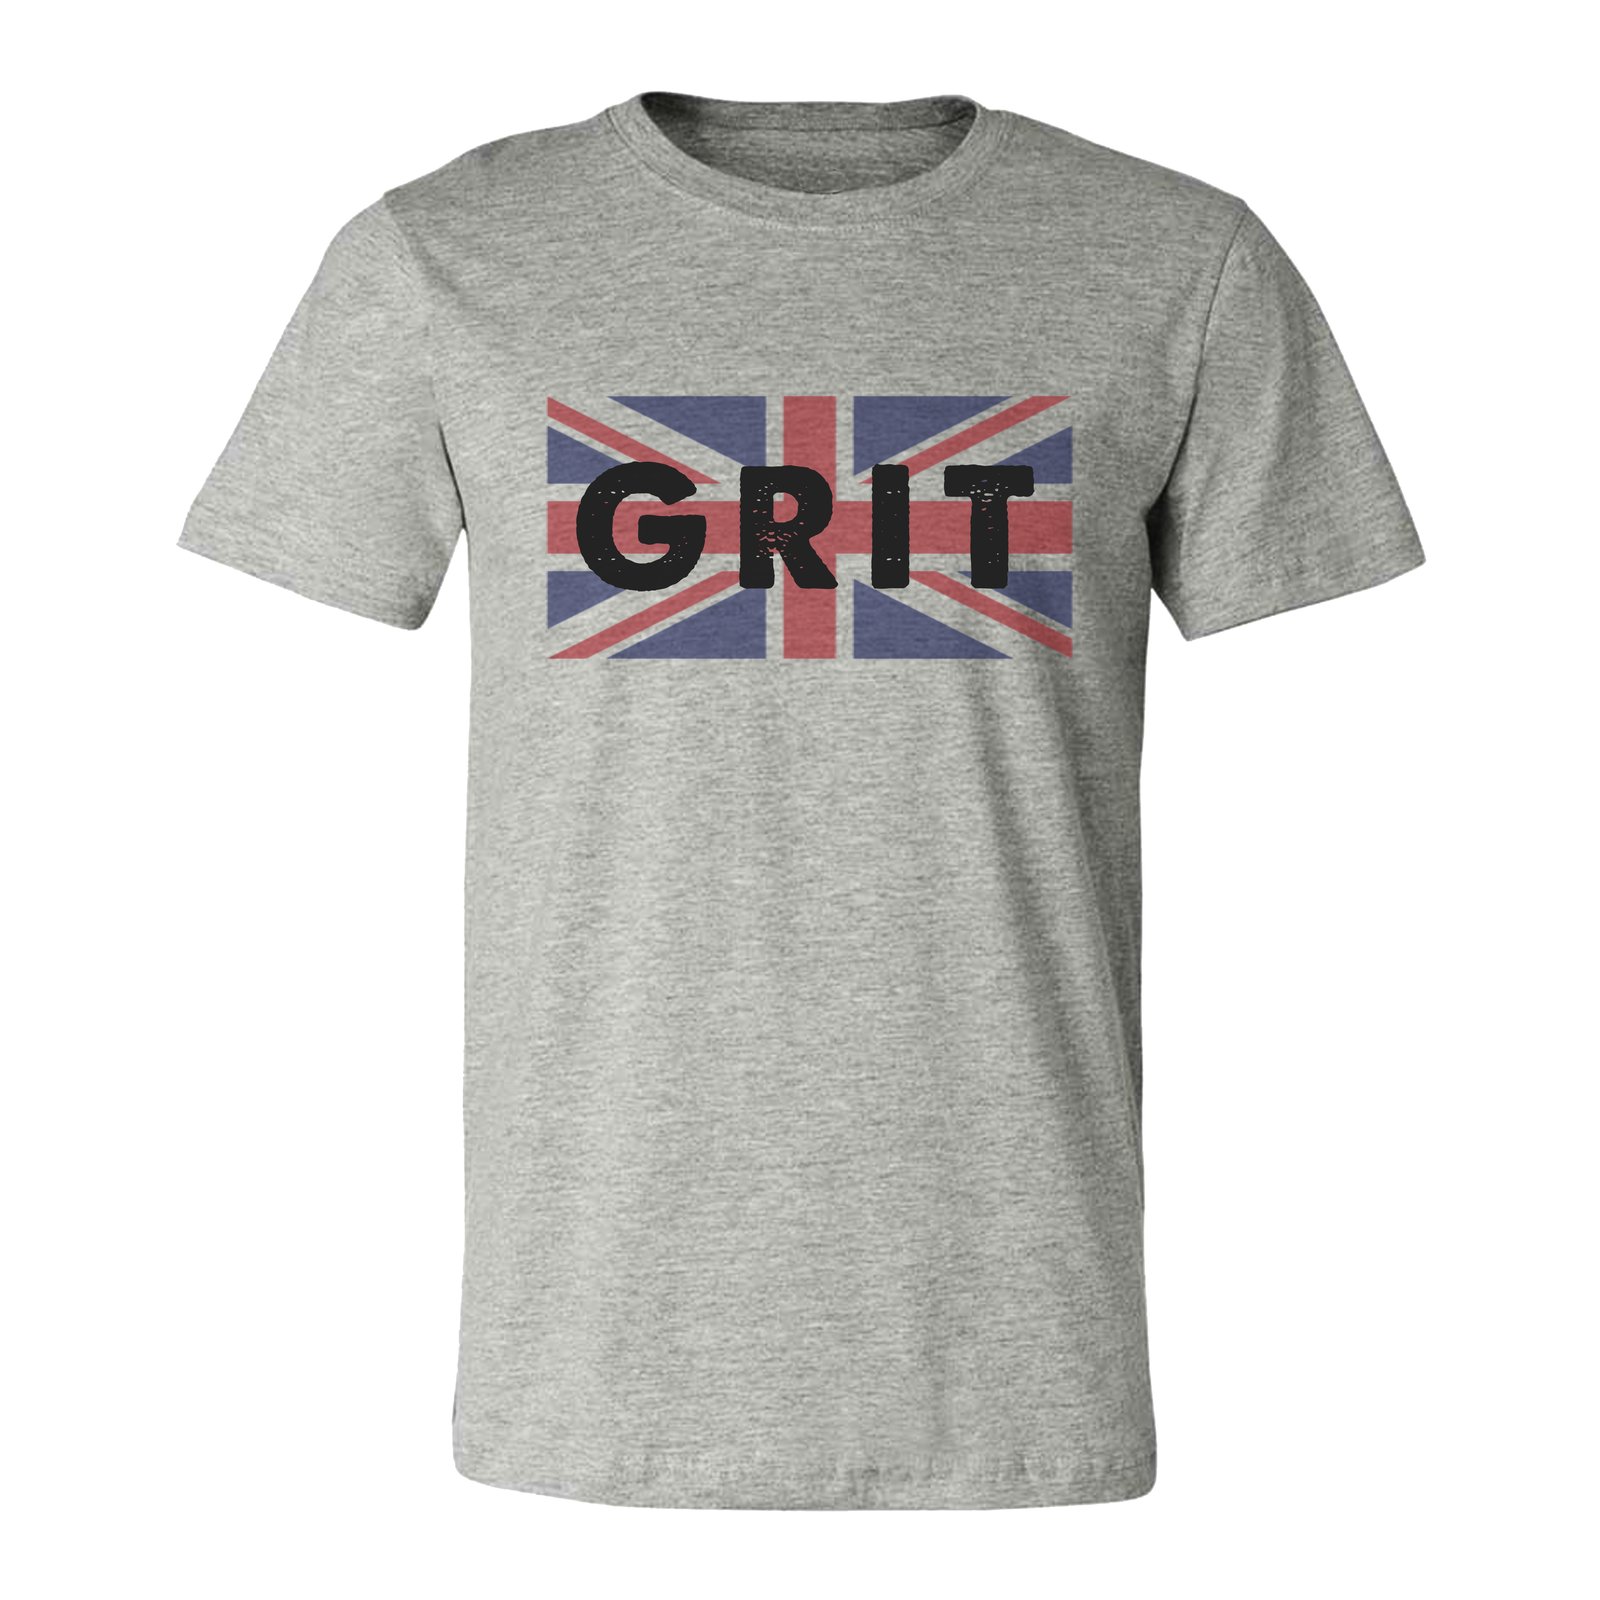 Brit Grit by Paul D. Brazill